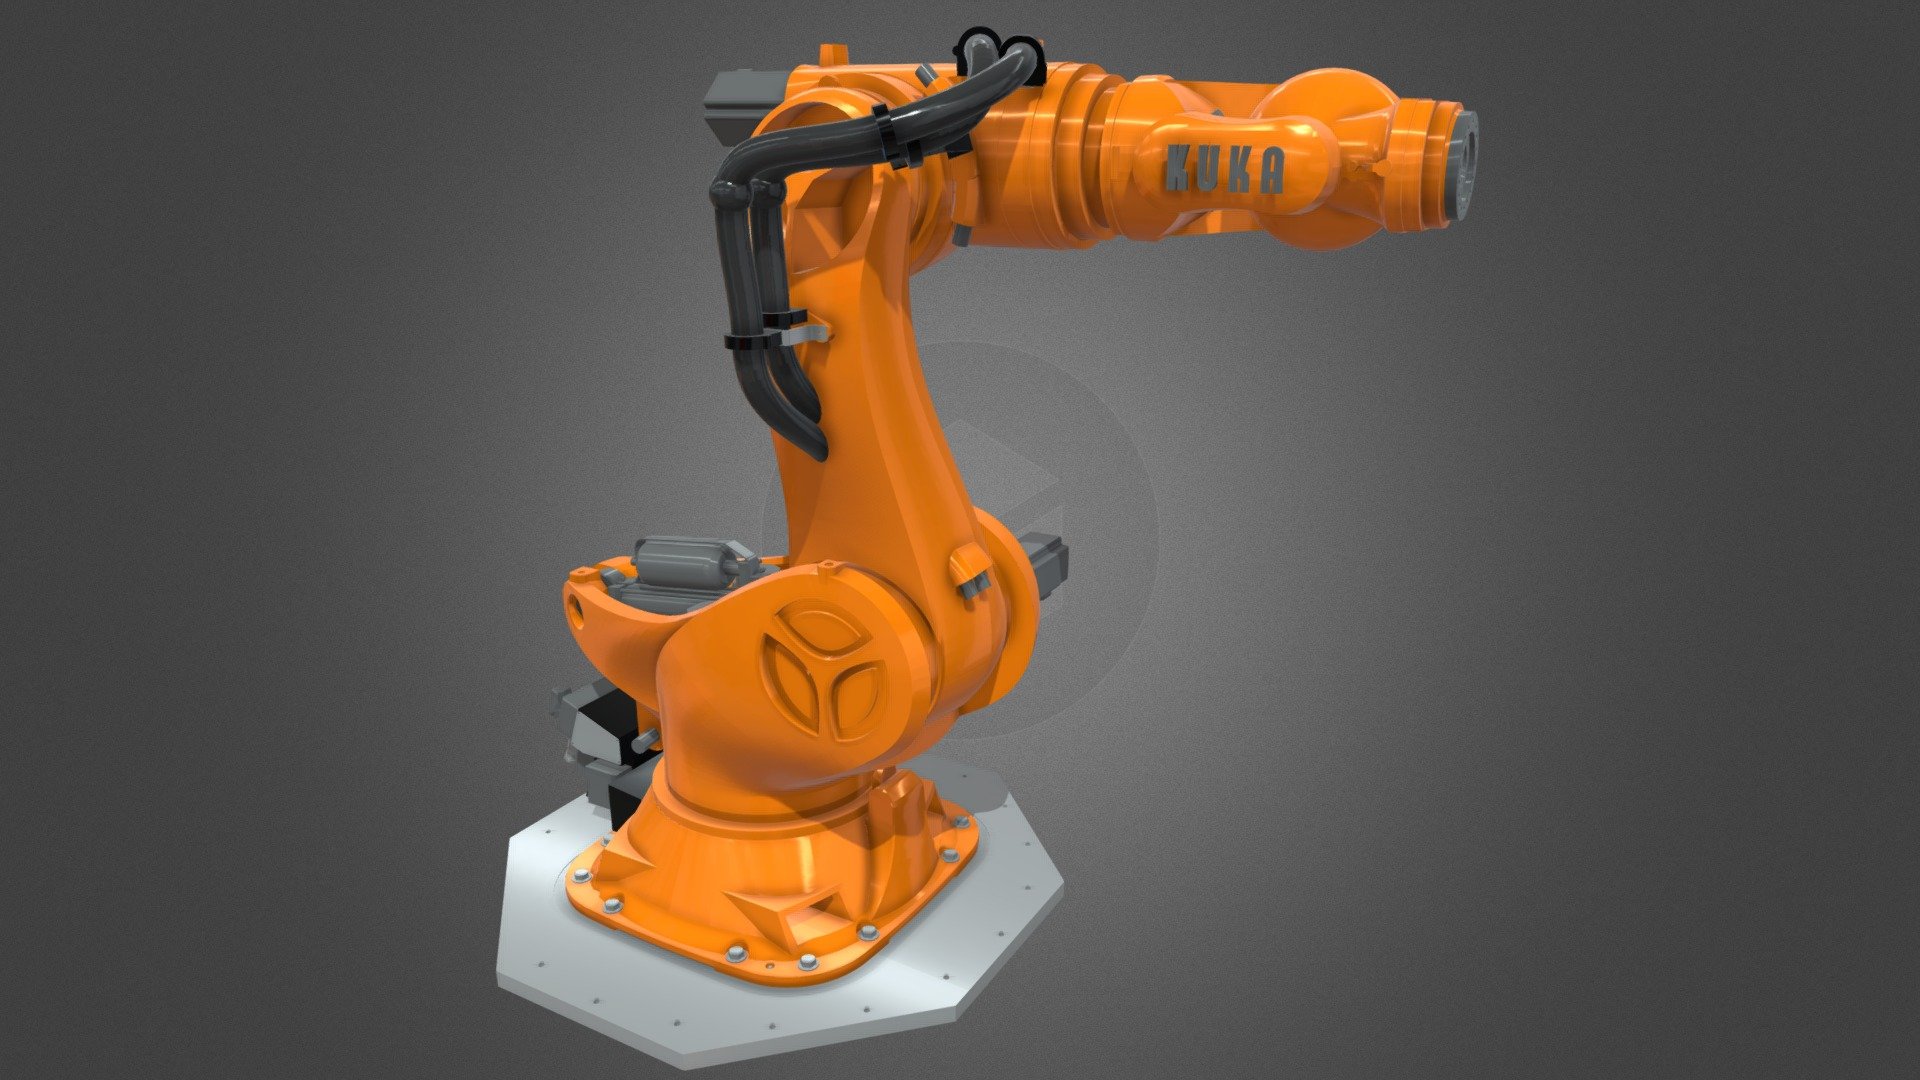 Kuka robot arm model KR100
Ultra detailed robotic arm model - Kuka Robot Arm KR1000 TITAN - Buy Royalty Free 3D model by fxpear 3d model